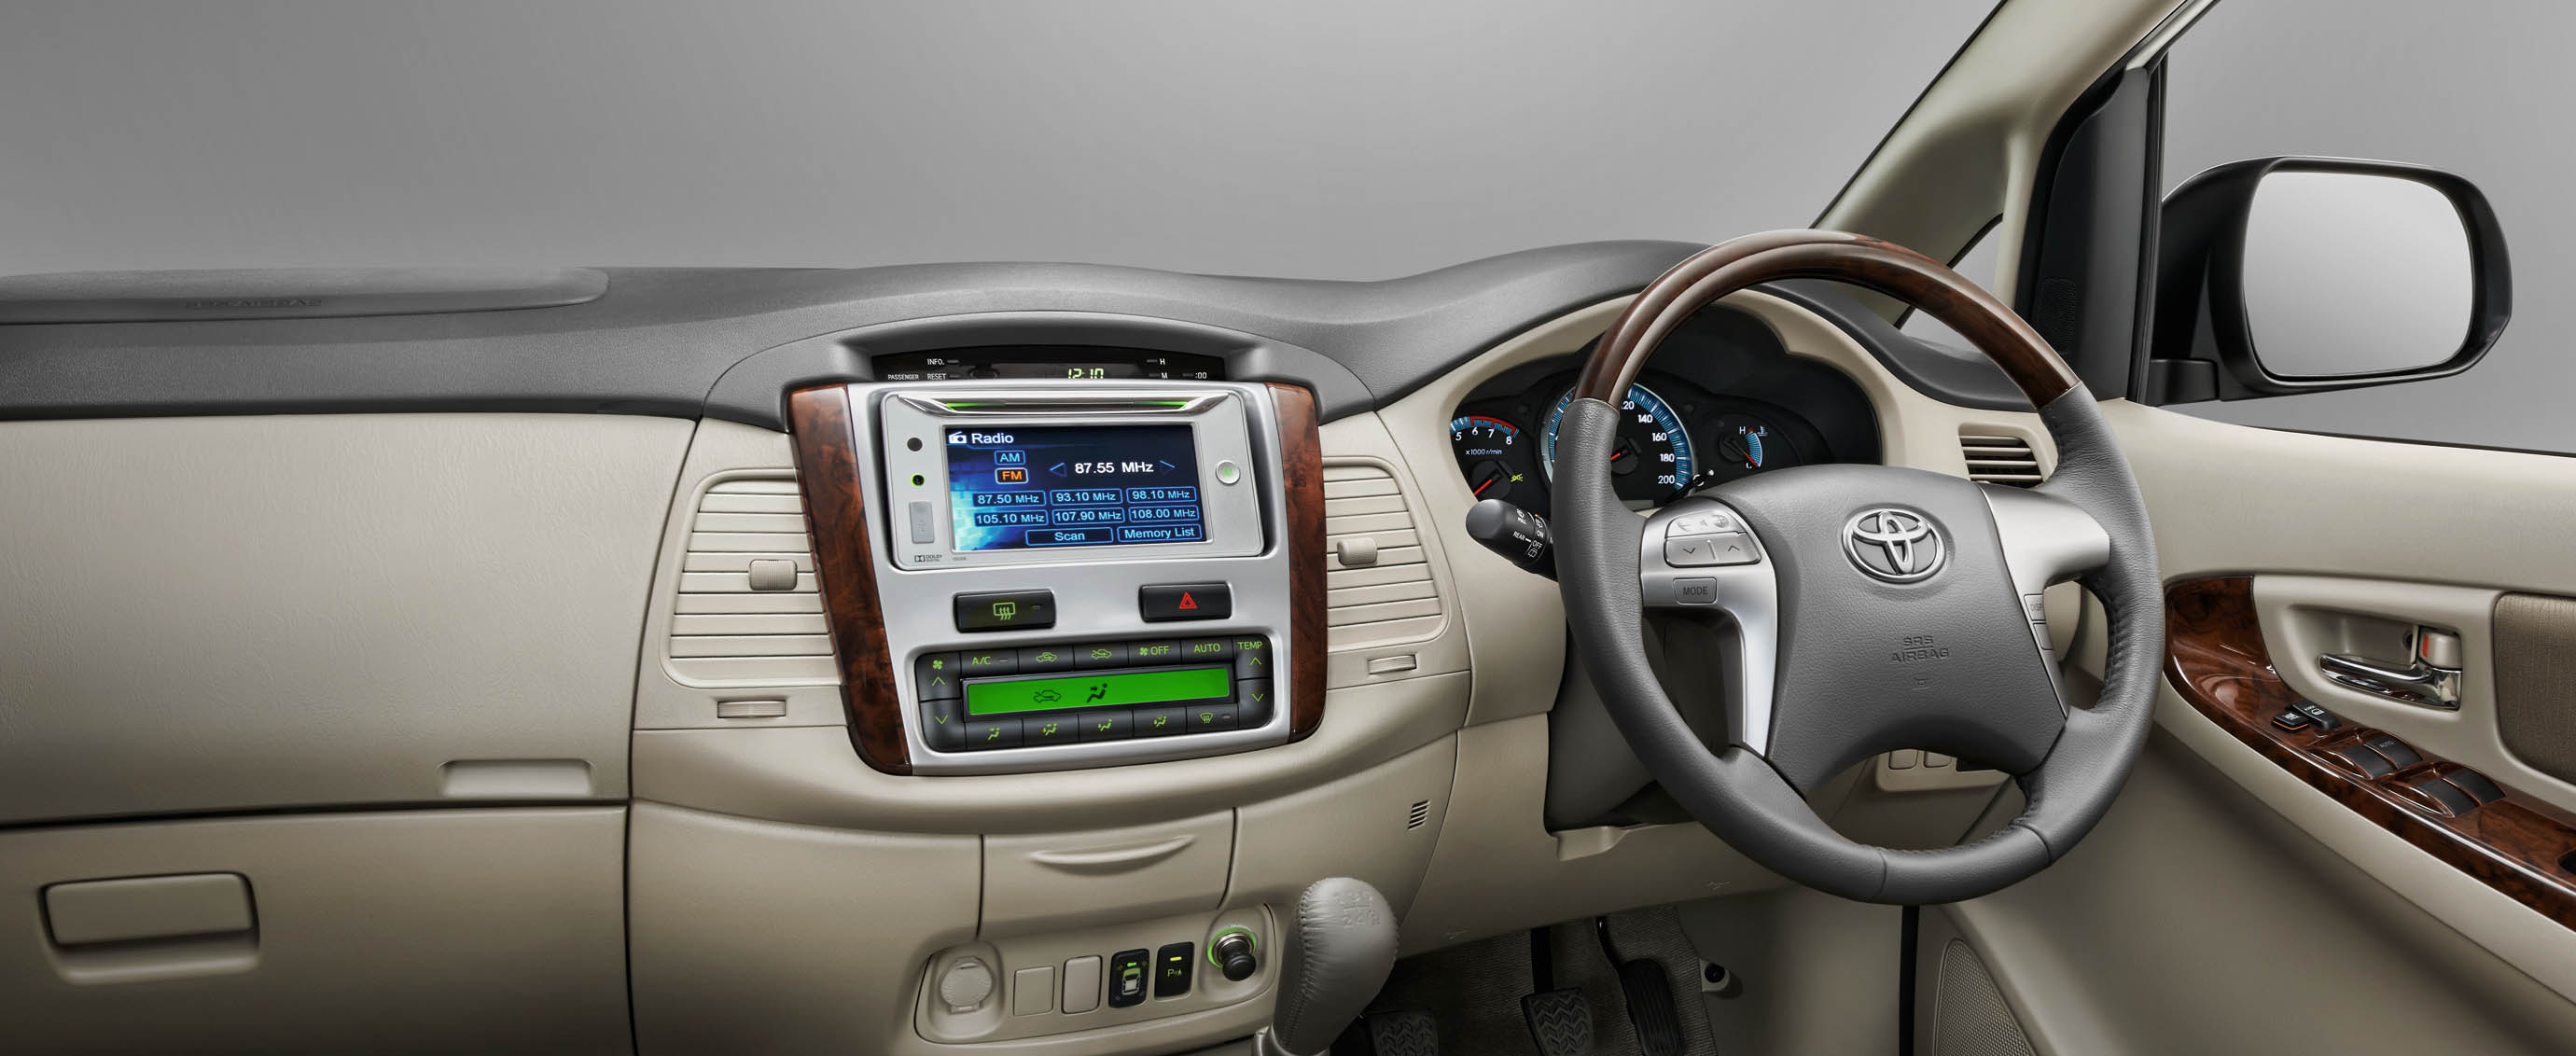  Modifikasi Audio Toyota Innova Ottomania86